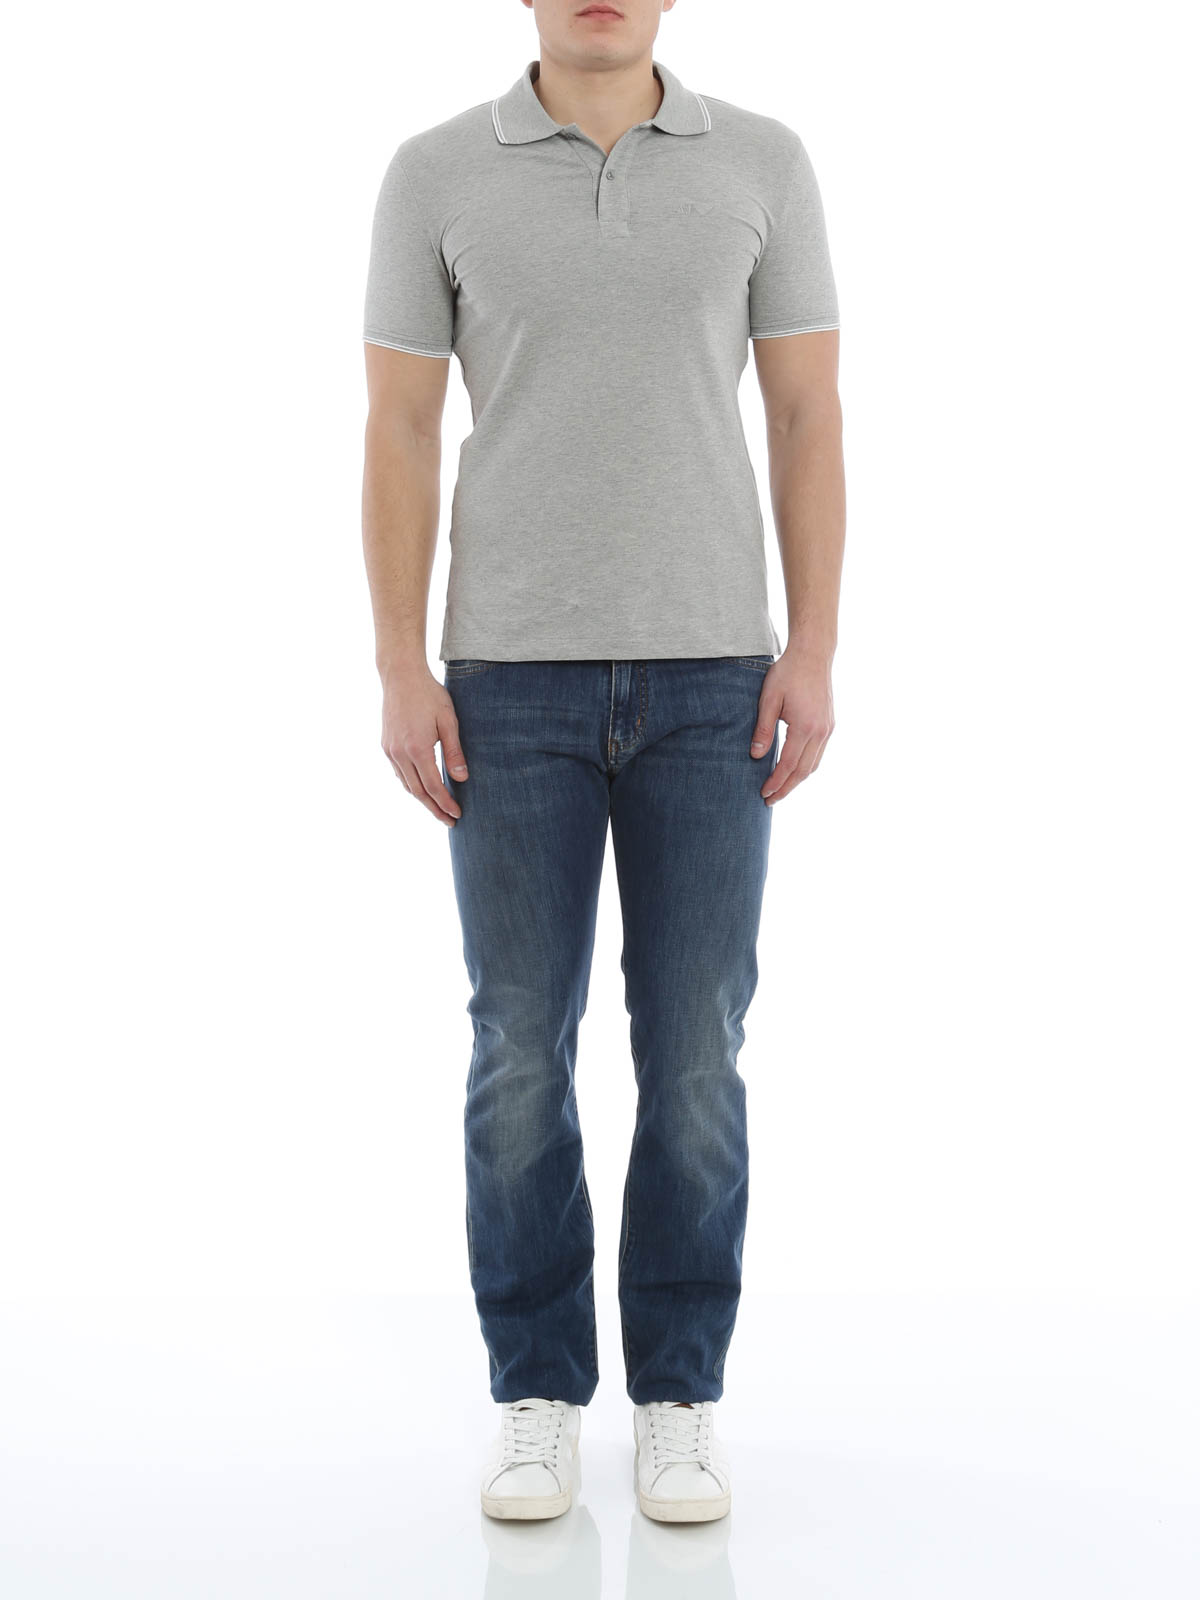 Haat Faculteit pil Polo shirts Armani Jeans - AJ Polo shirt - 06M30J2 | Shop online at iKRIX